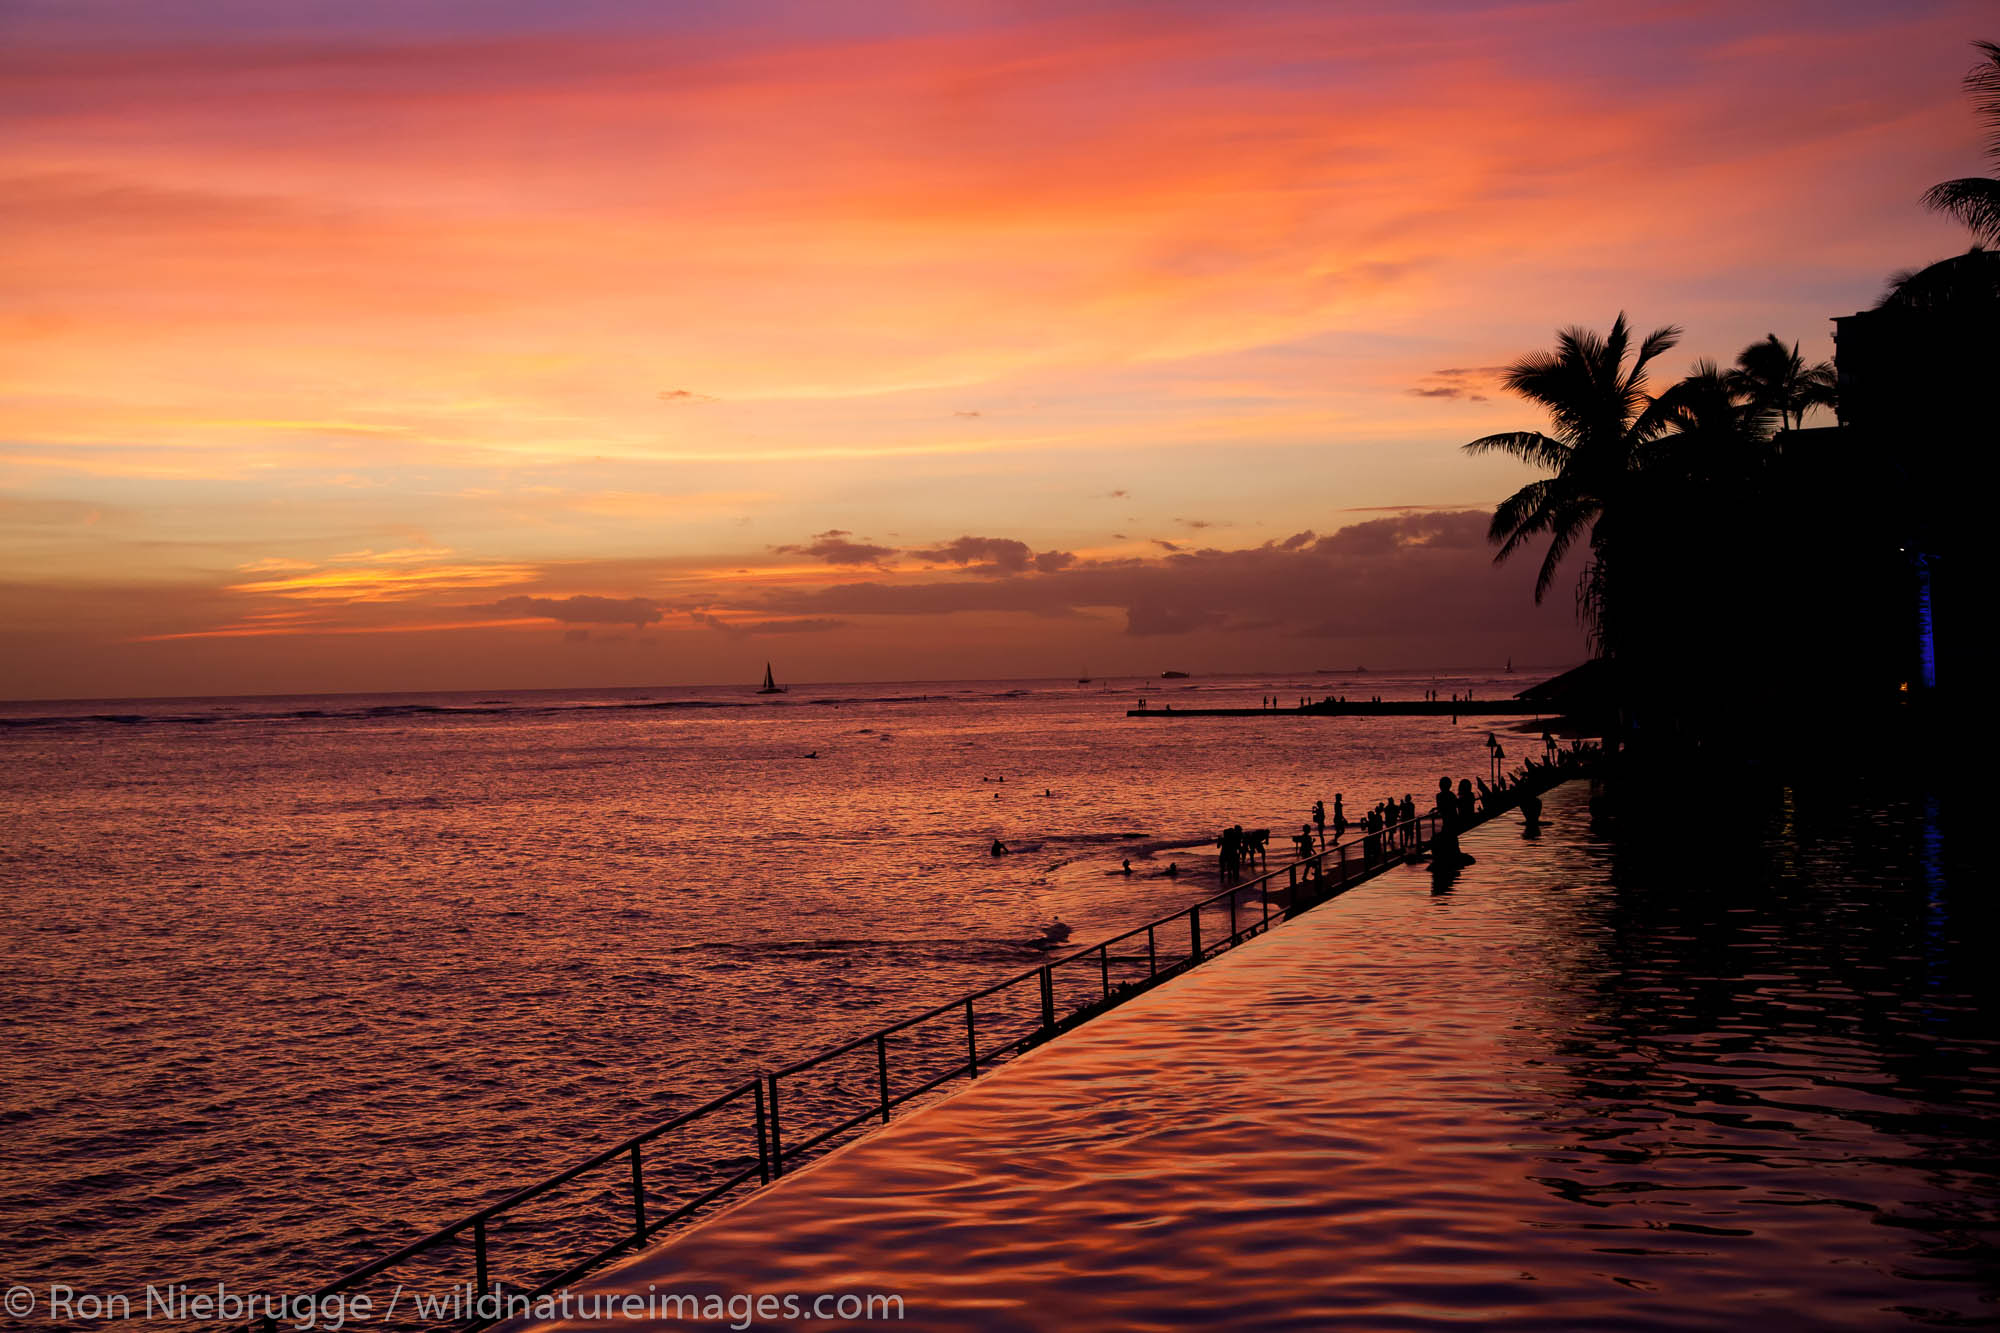 Sunset and the pool at the SheratonWaikiki, Waikiki Beach, Honolulu, Hawaii.